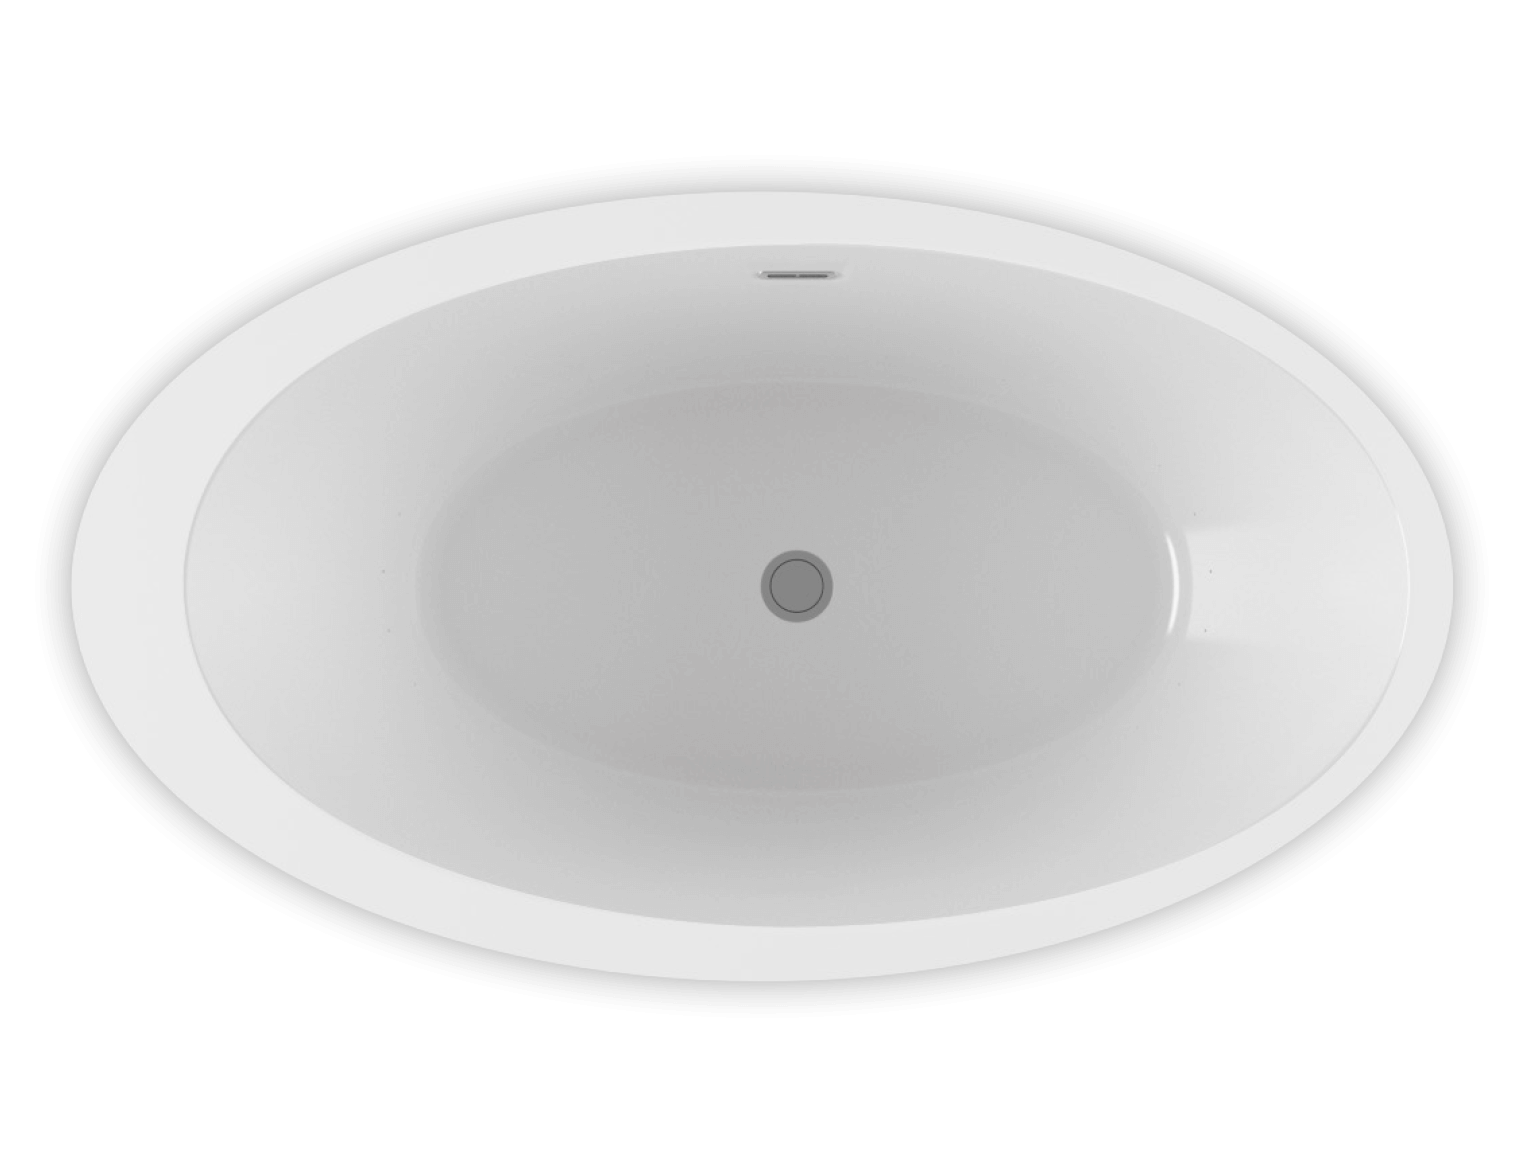 OPALIA 6839 Off Centered Ellipse Right air jet bathtub for your modern bathroom